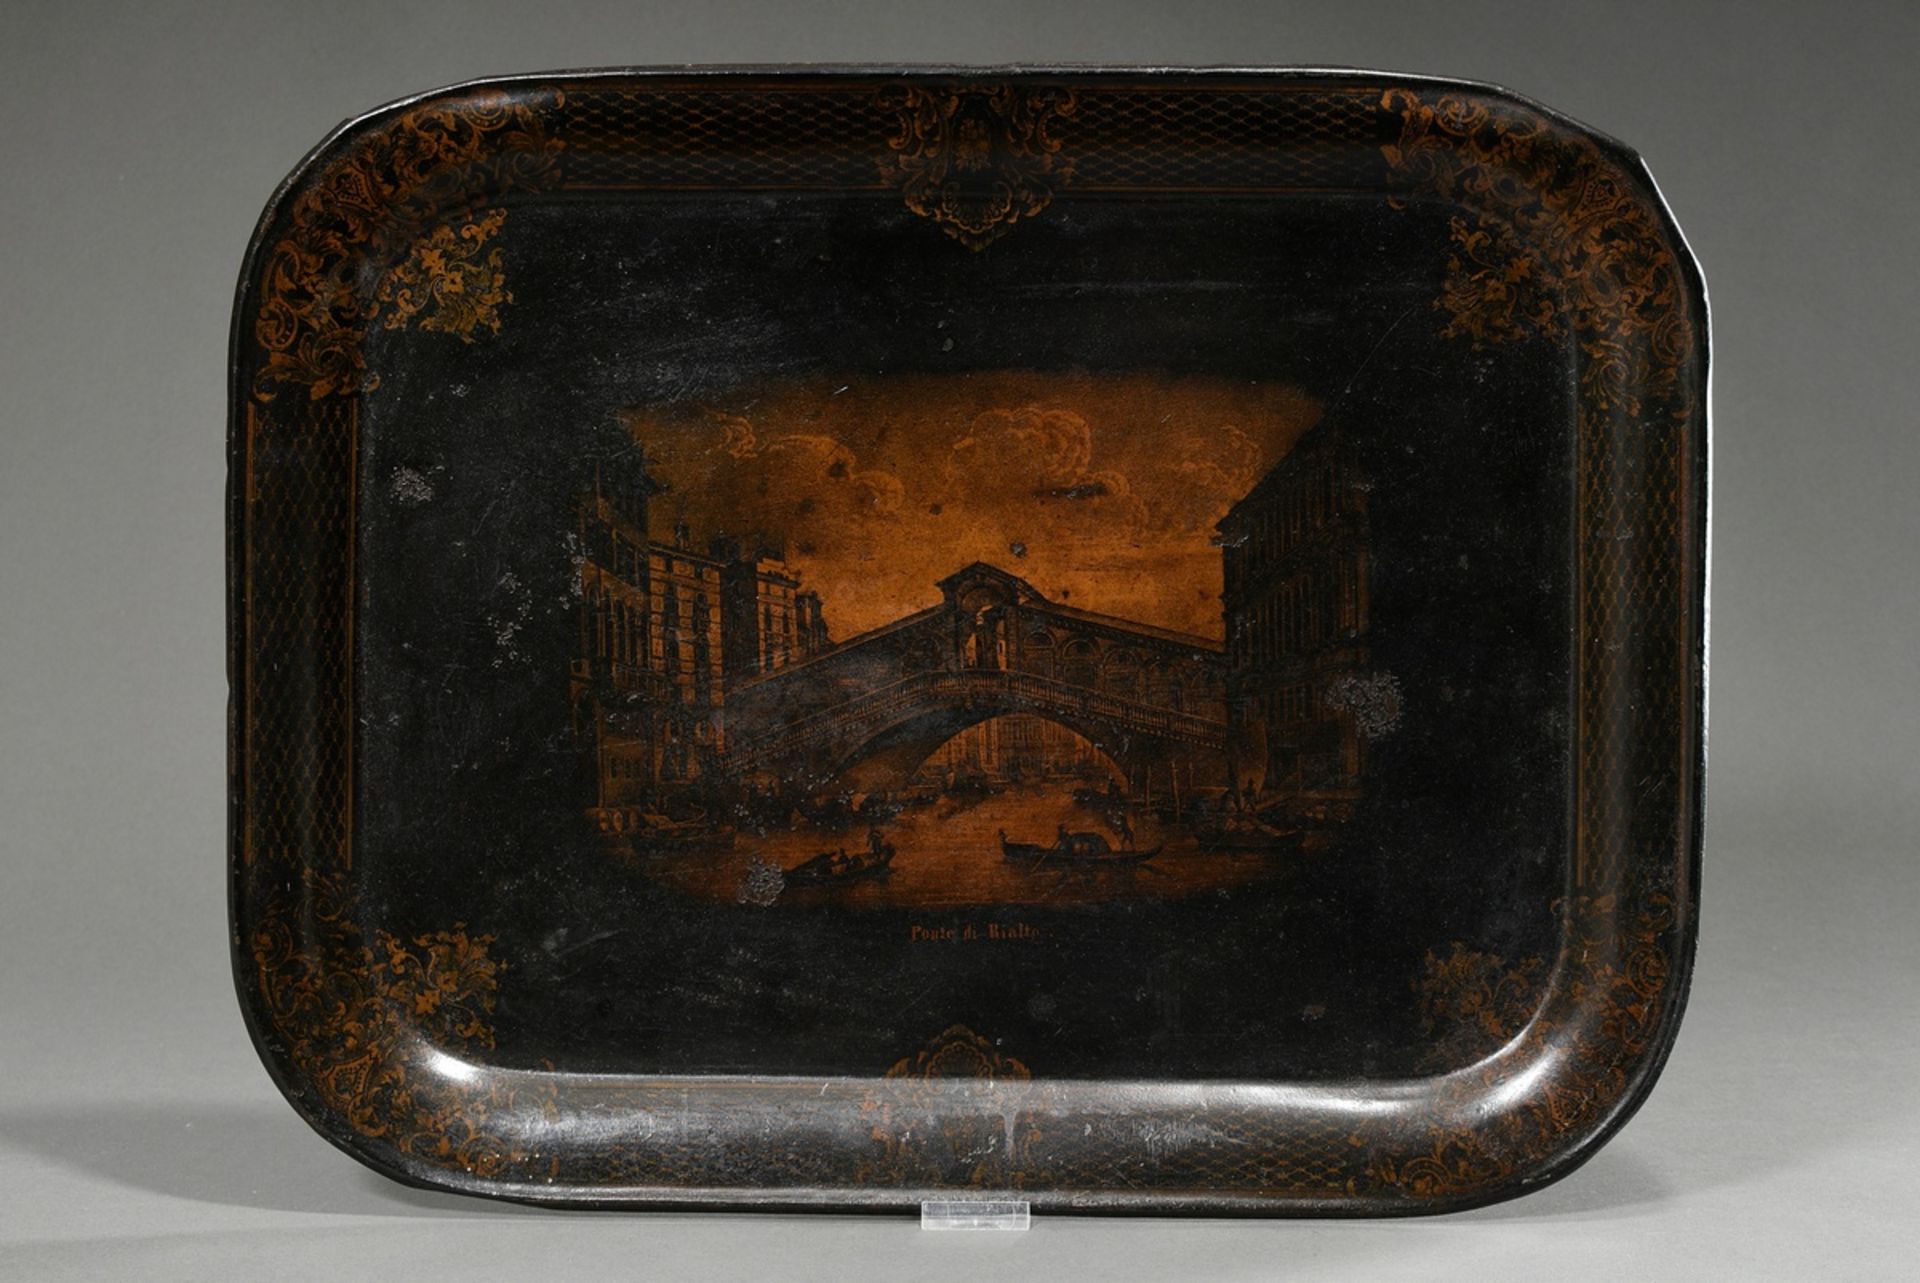 Rectangular Biedermeier tin tray with gold print on black background "Ponte di Rialto" in ornamenta